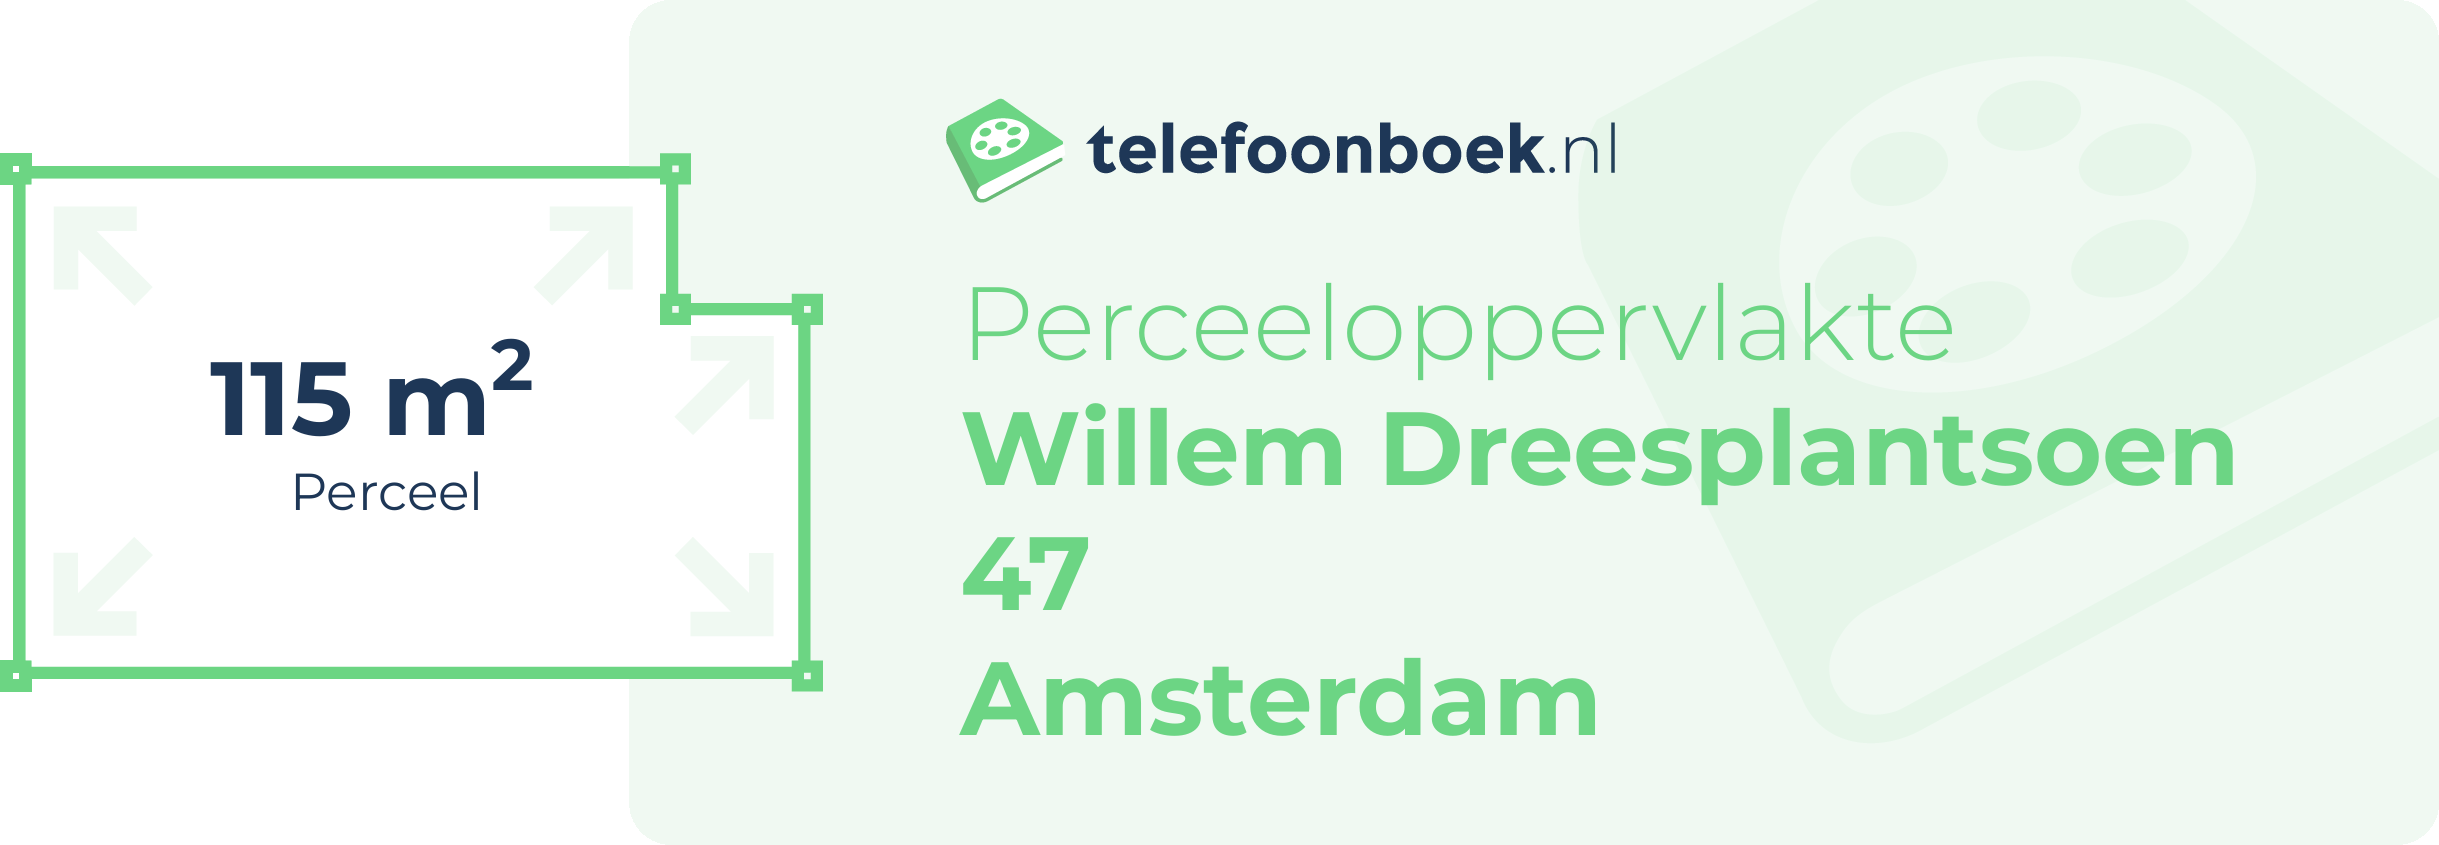 Perceeloppervlakte Willem Dreesplantsoen 47 Amsterdam